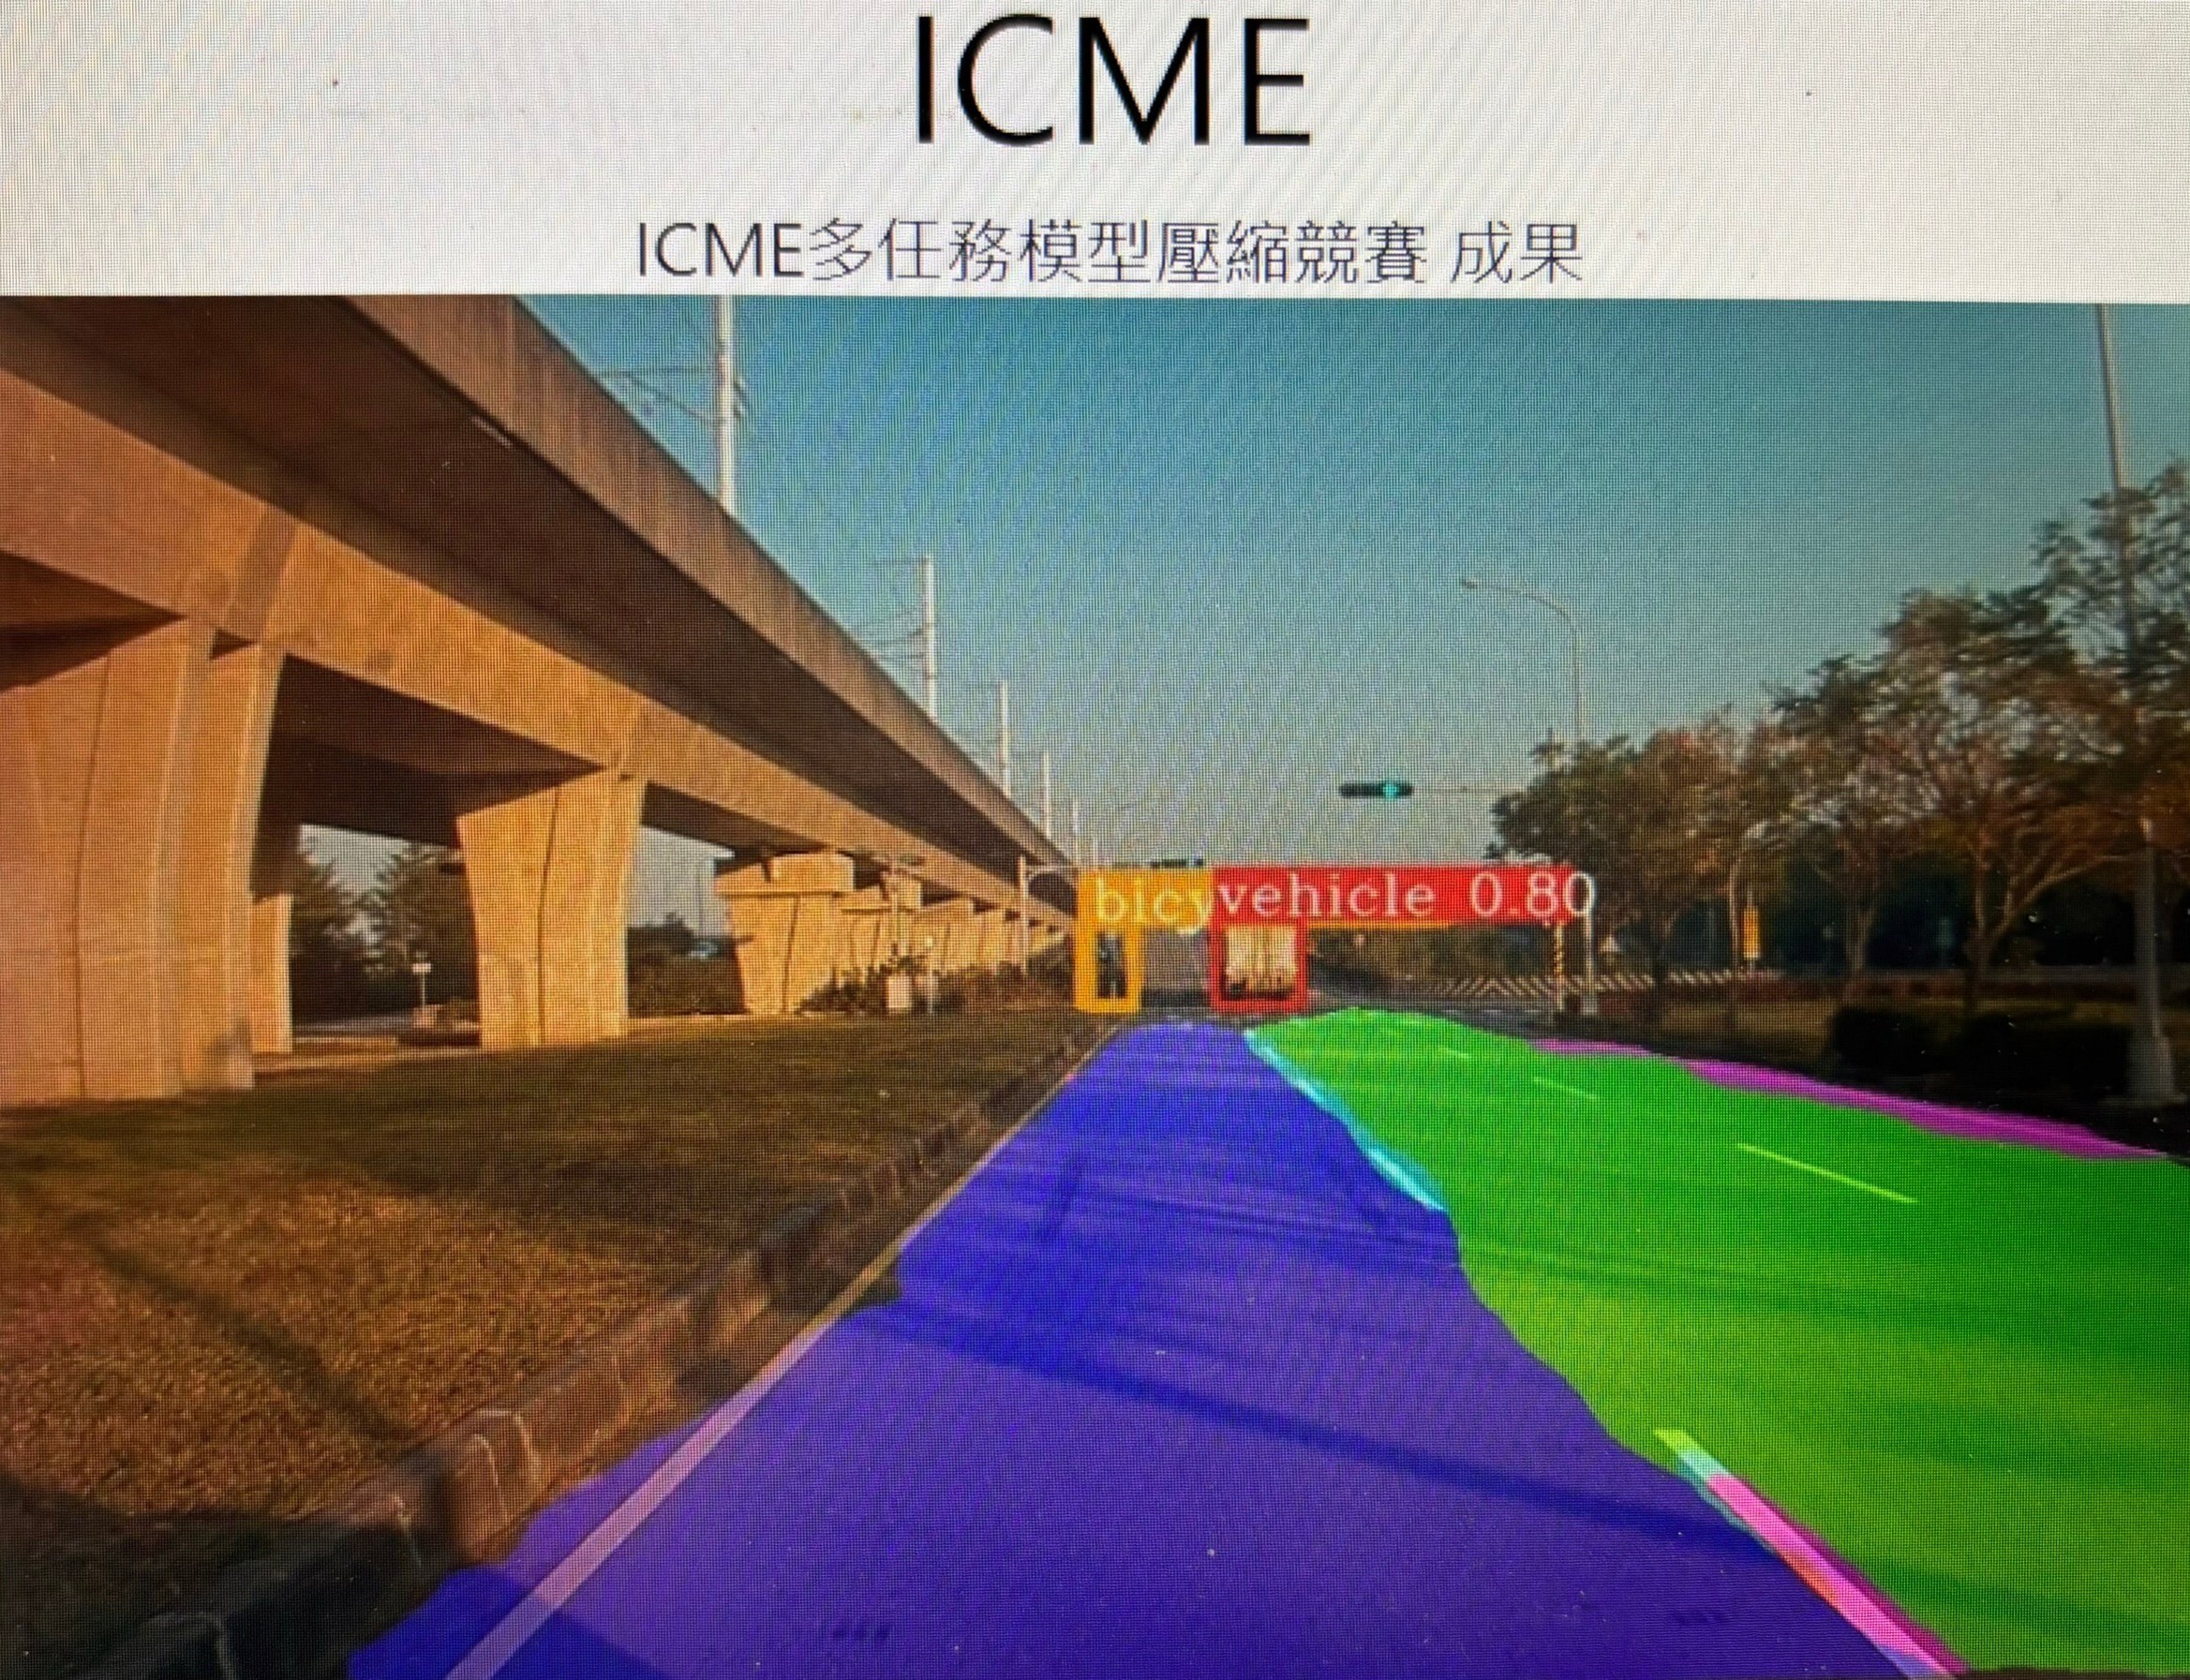 ICME競賽需開發一個通用的模型同時完成語意分割模型與物件偵測兩大經典任務